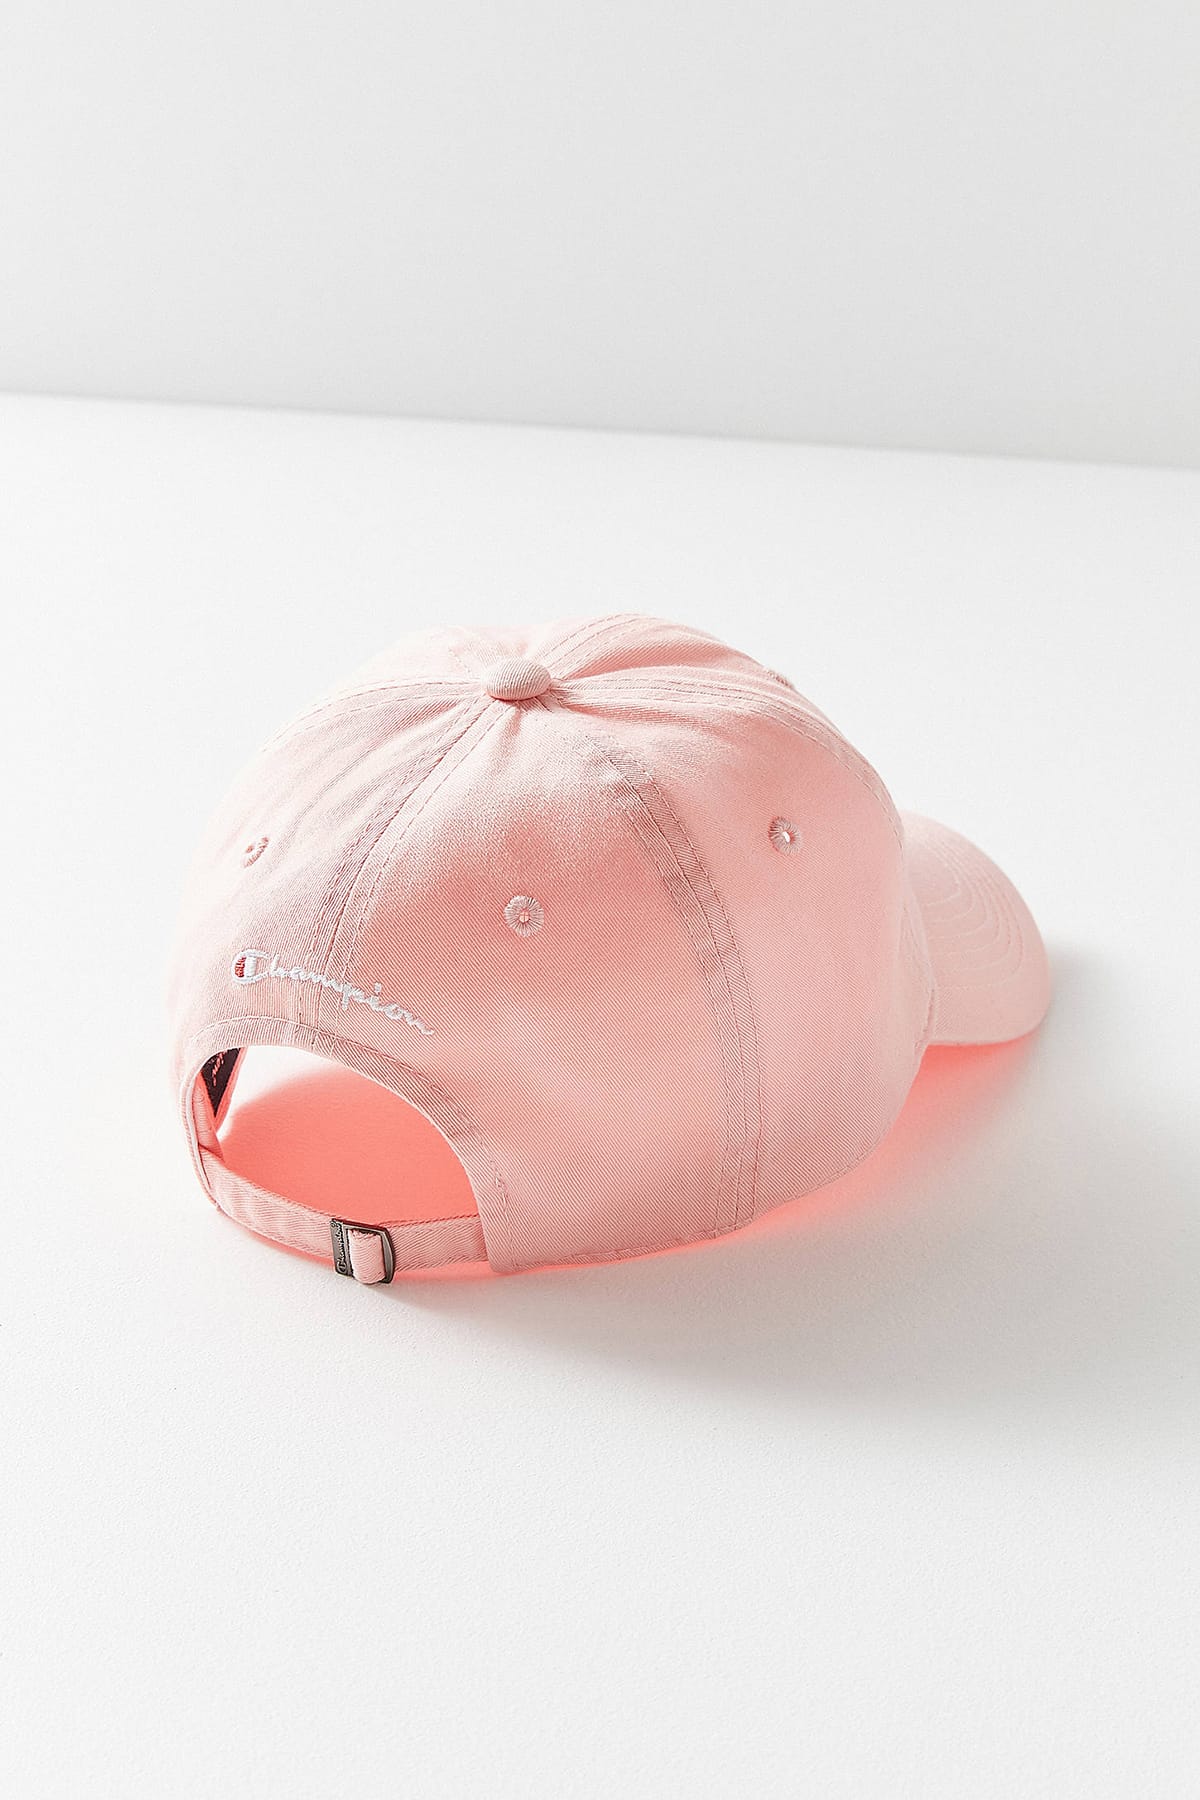 pink champion baseball cap